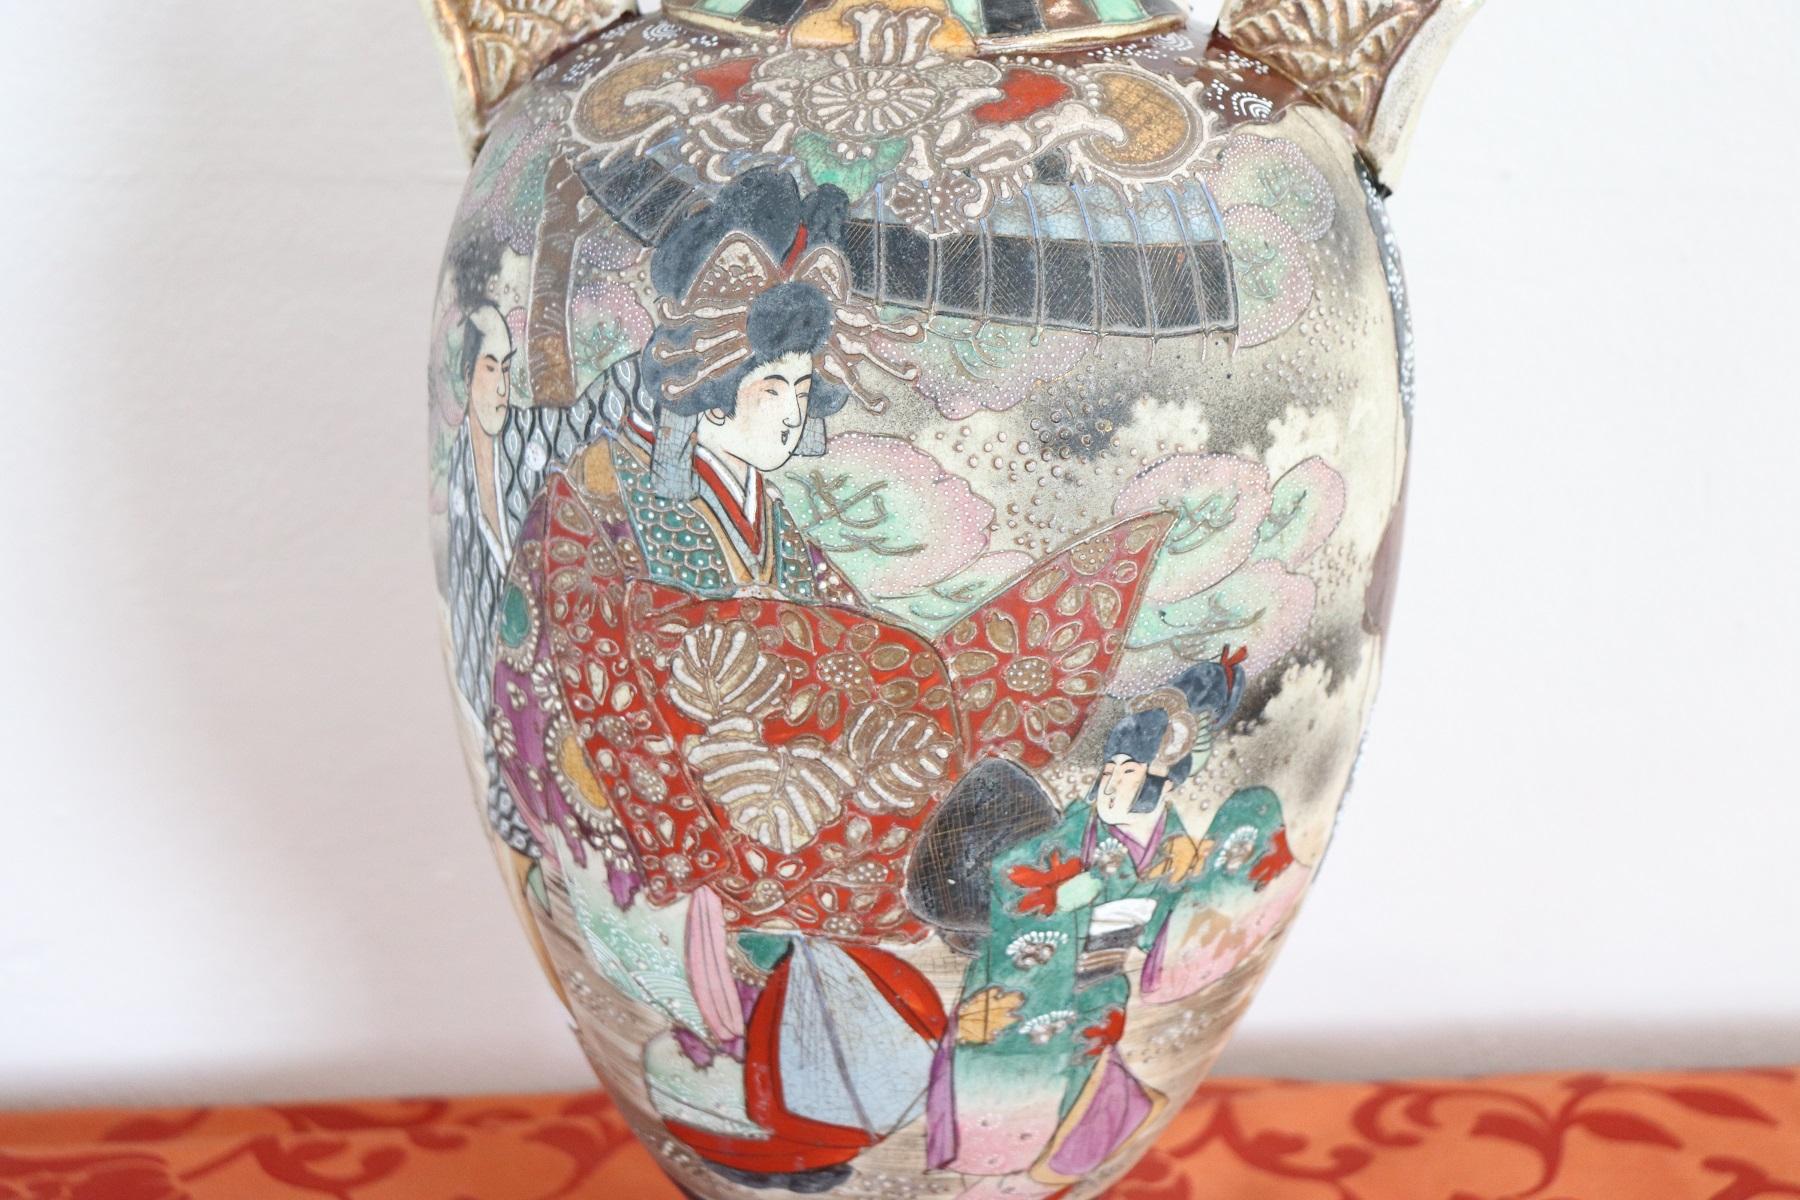 20th Century Japanese Vintage Artistic Satsuma Vase in Decorated Ceramic For Sale 2